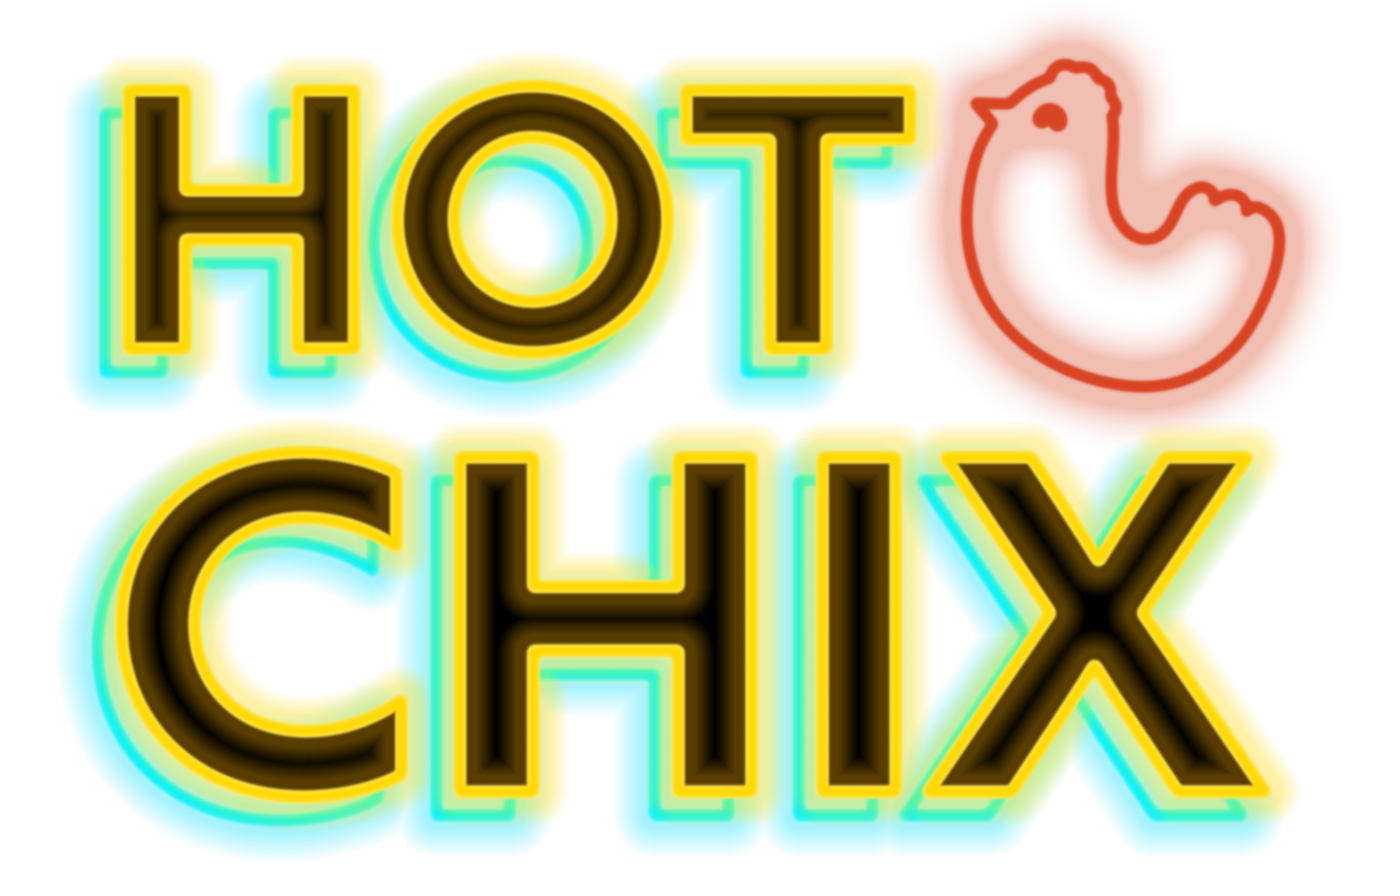 Hot Chix